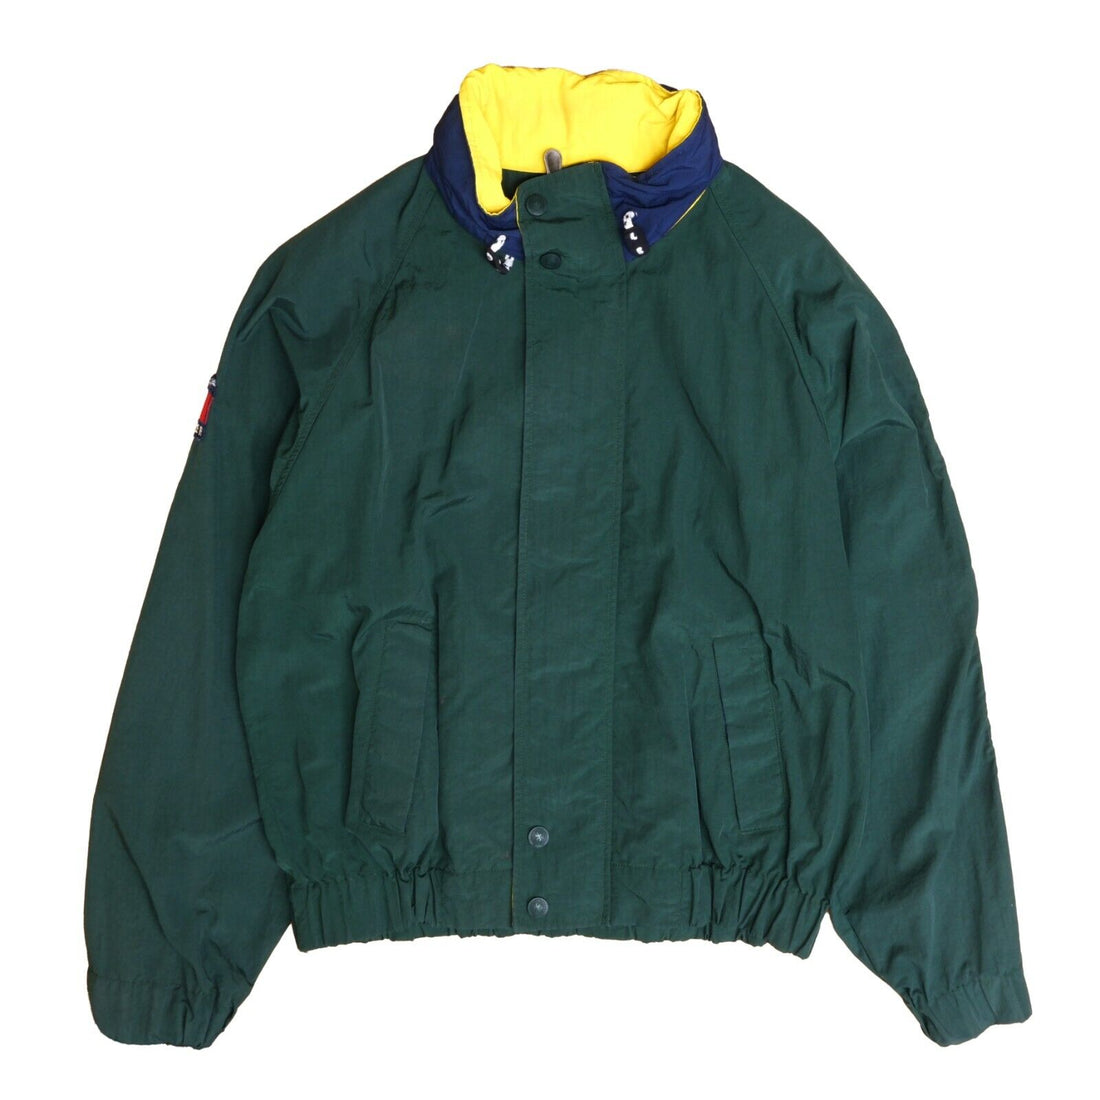 Vintage Tommy Hilfiger Light Jacket Size Large Green Sleeve Spell Out